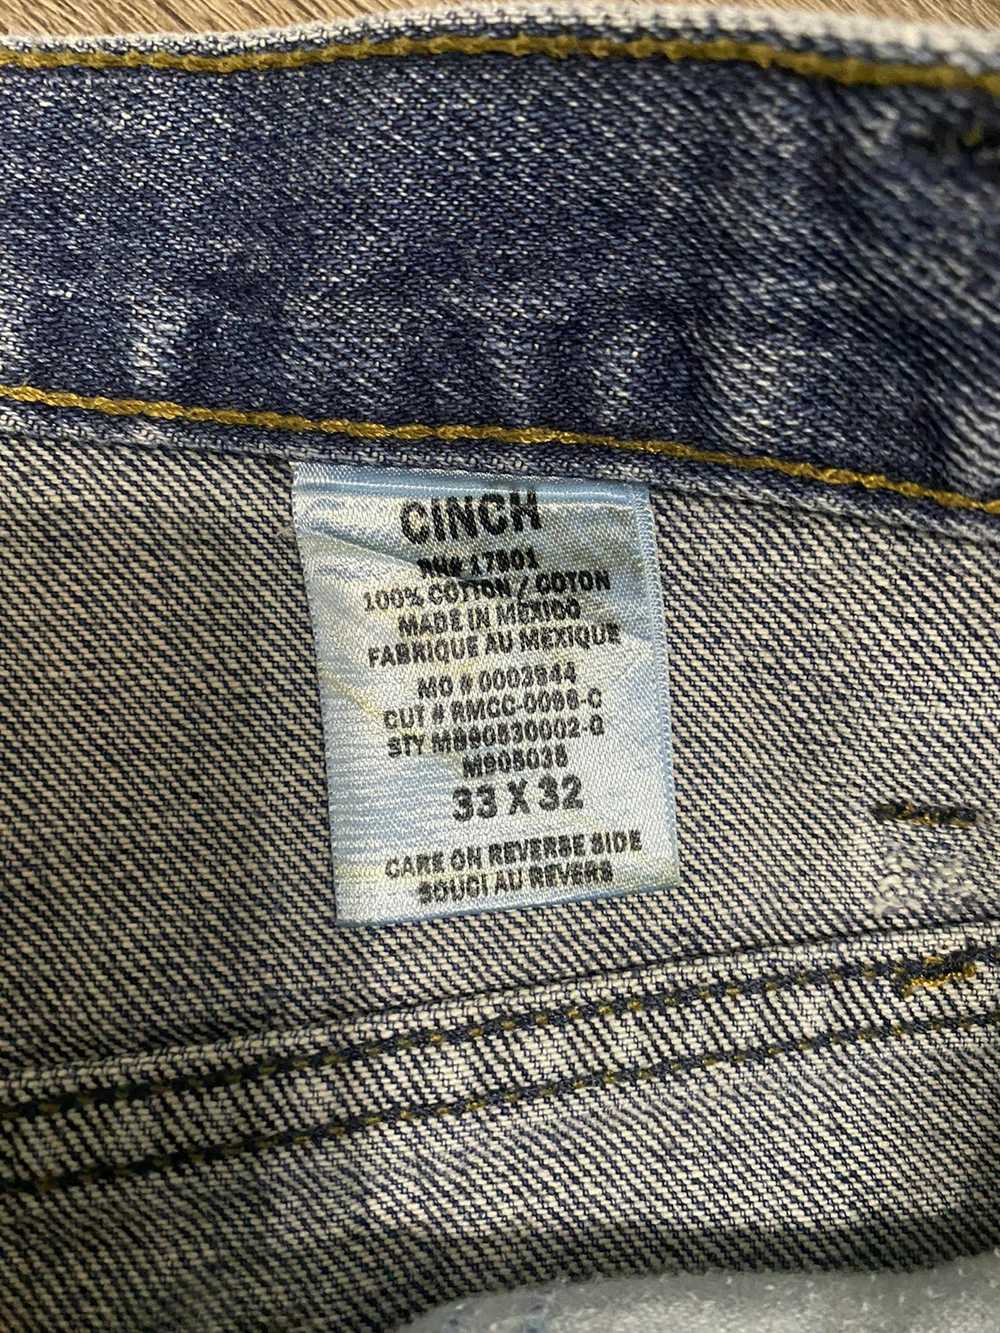 Cinch Cinch Blue Denim Jeans - image 5